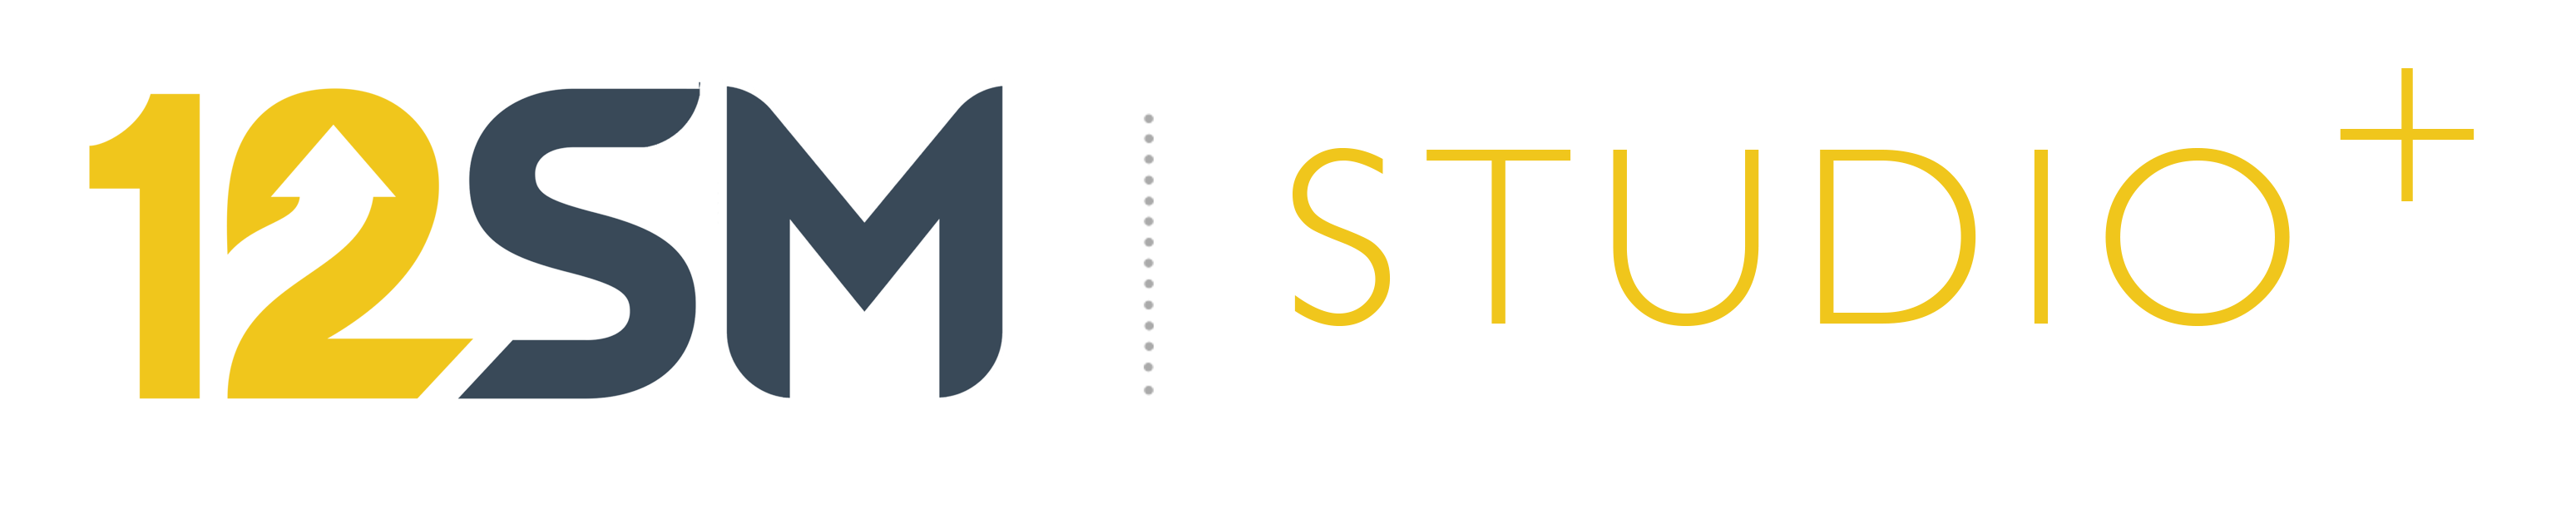 12sm-studio-logo-06